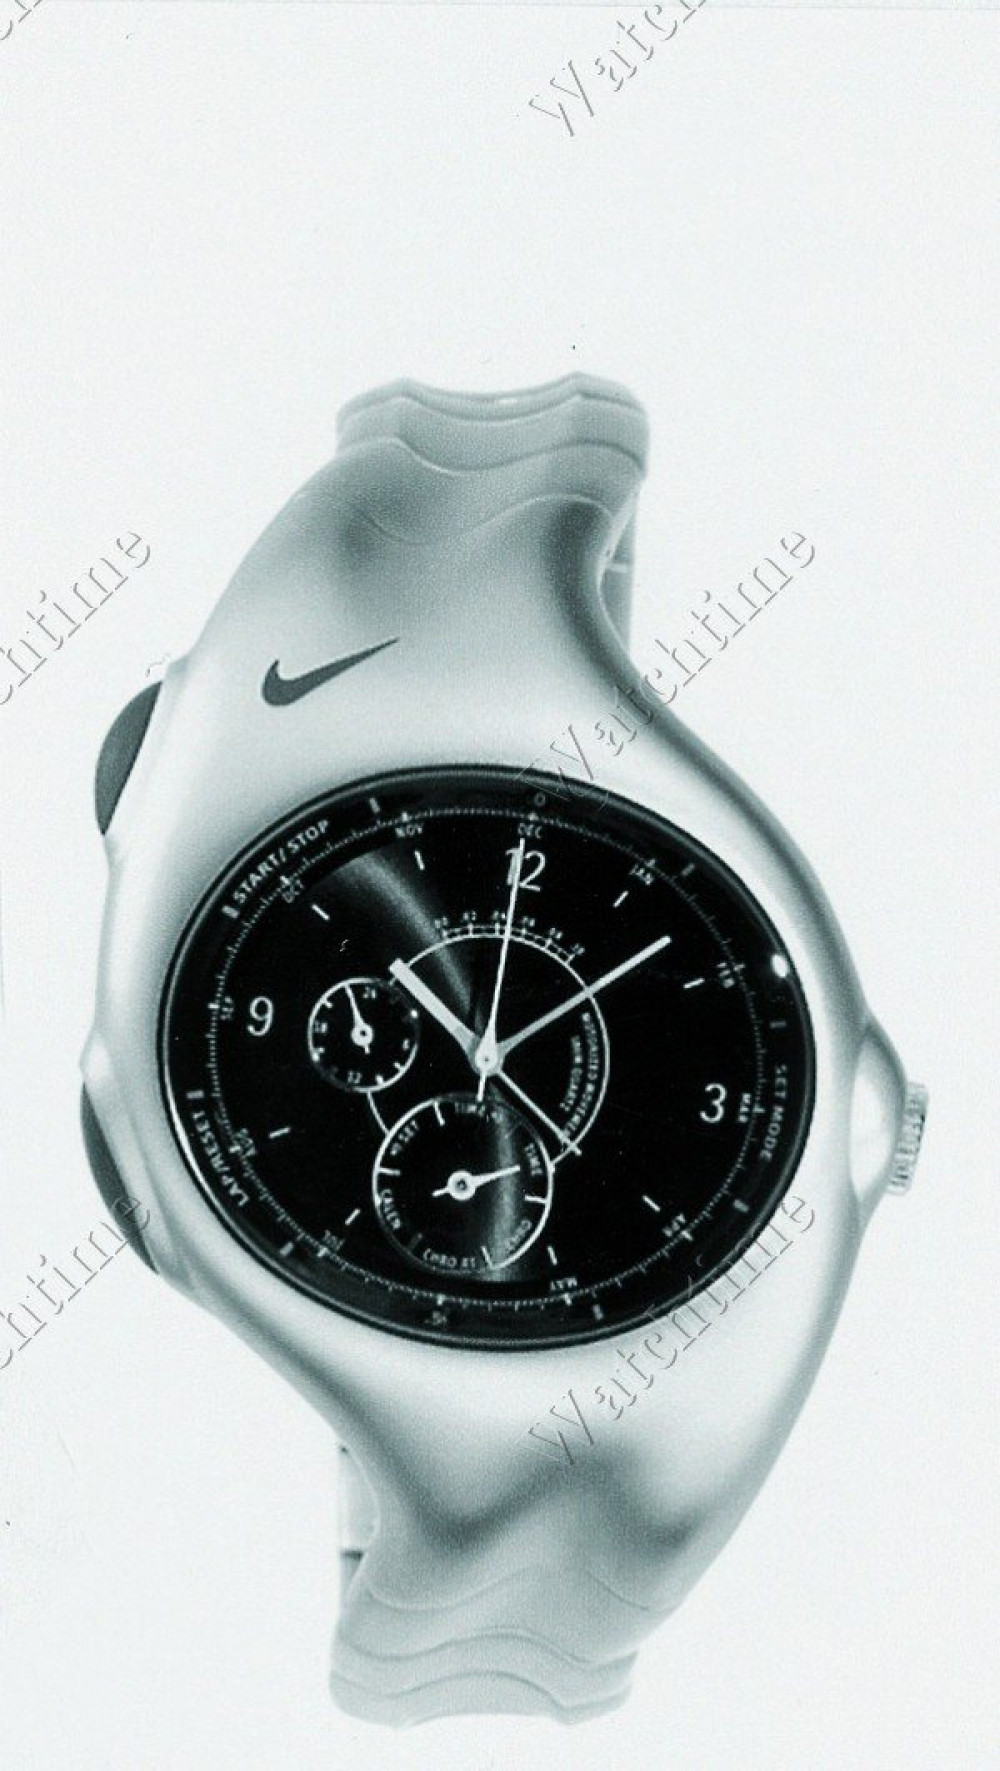 Zegarek firmy Nike, model Nike Triax Armored Super